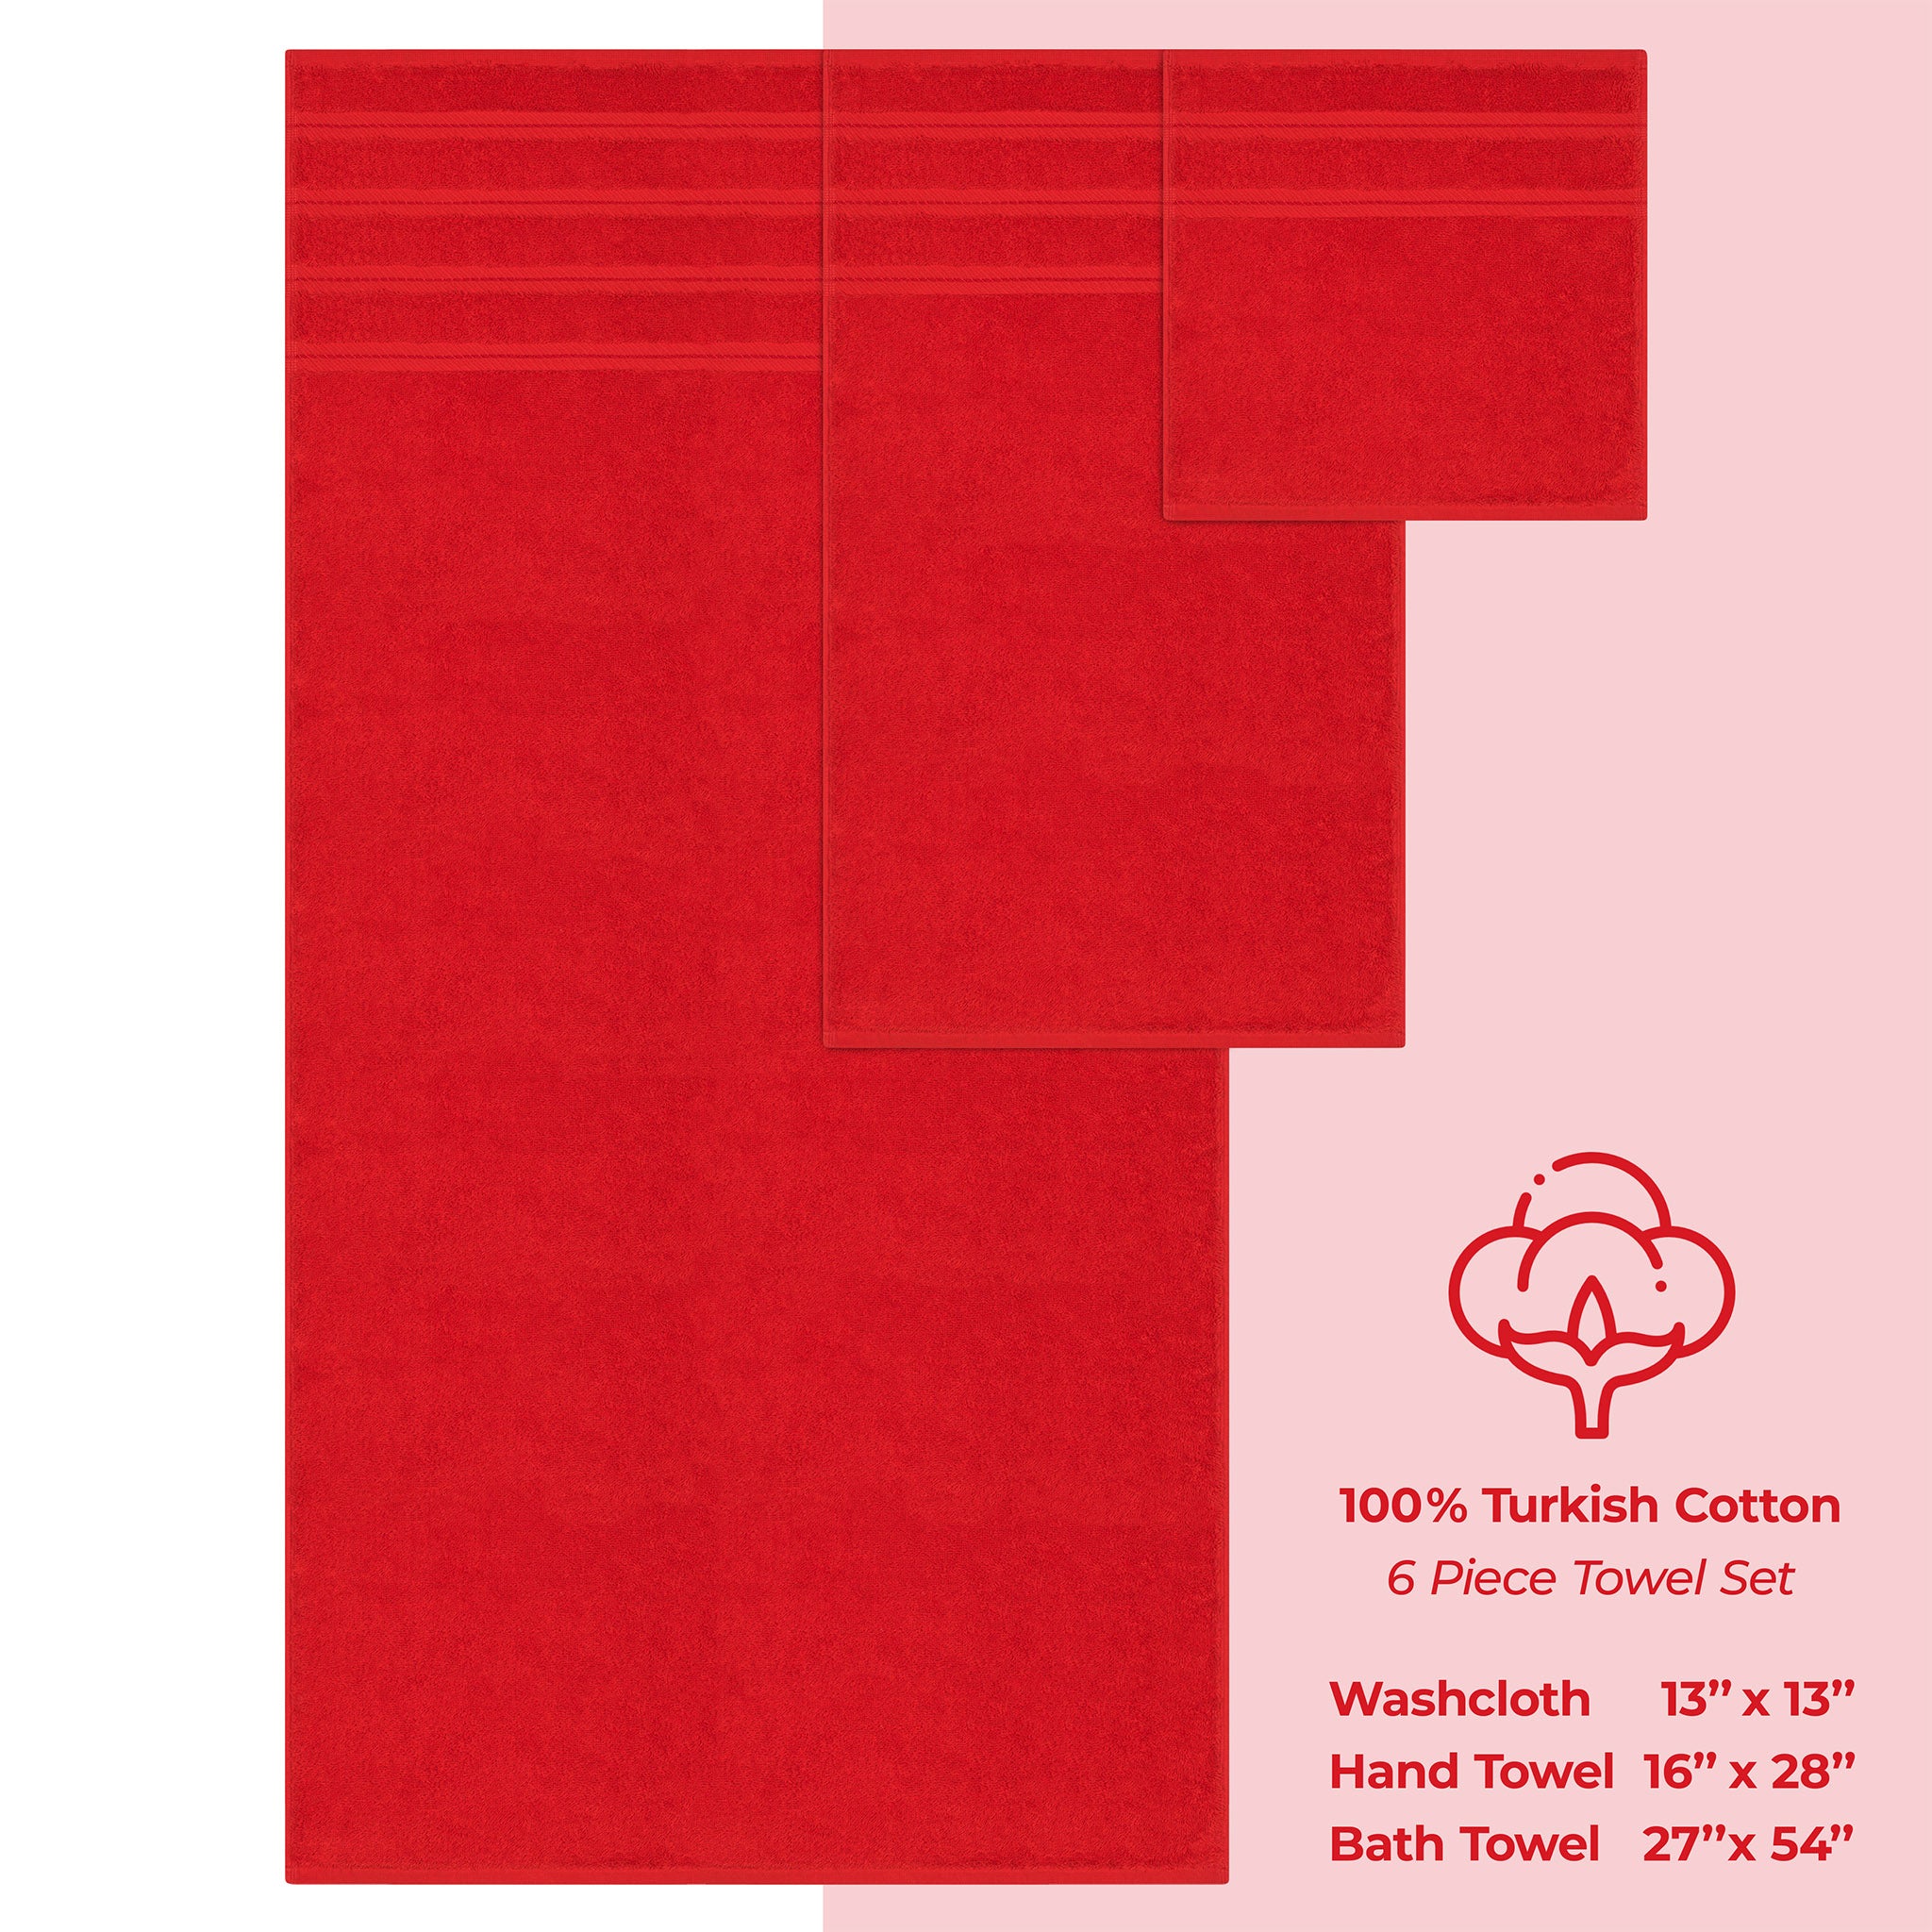 American Soft Linen 100% Turkish Cotton 6 Piece Towel Set Wholesale red-4